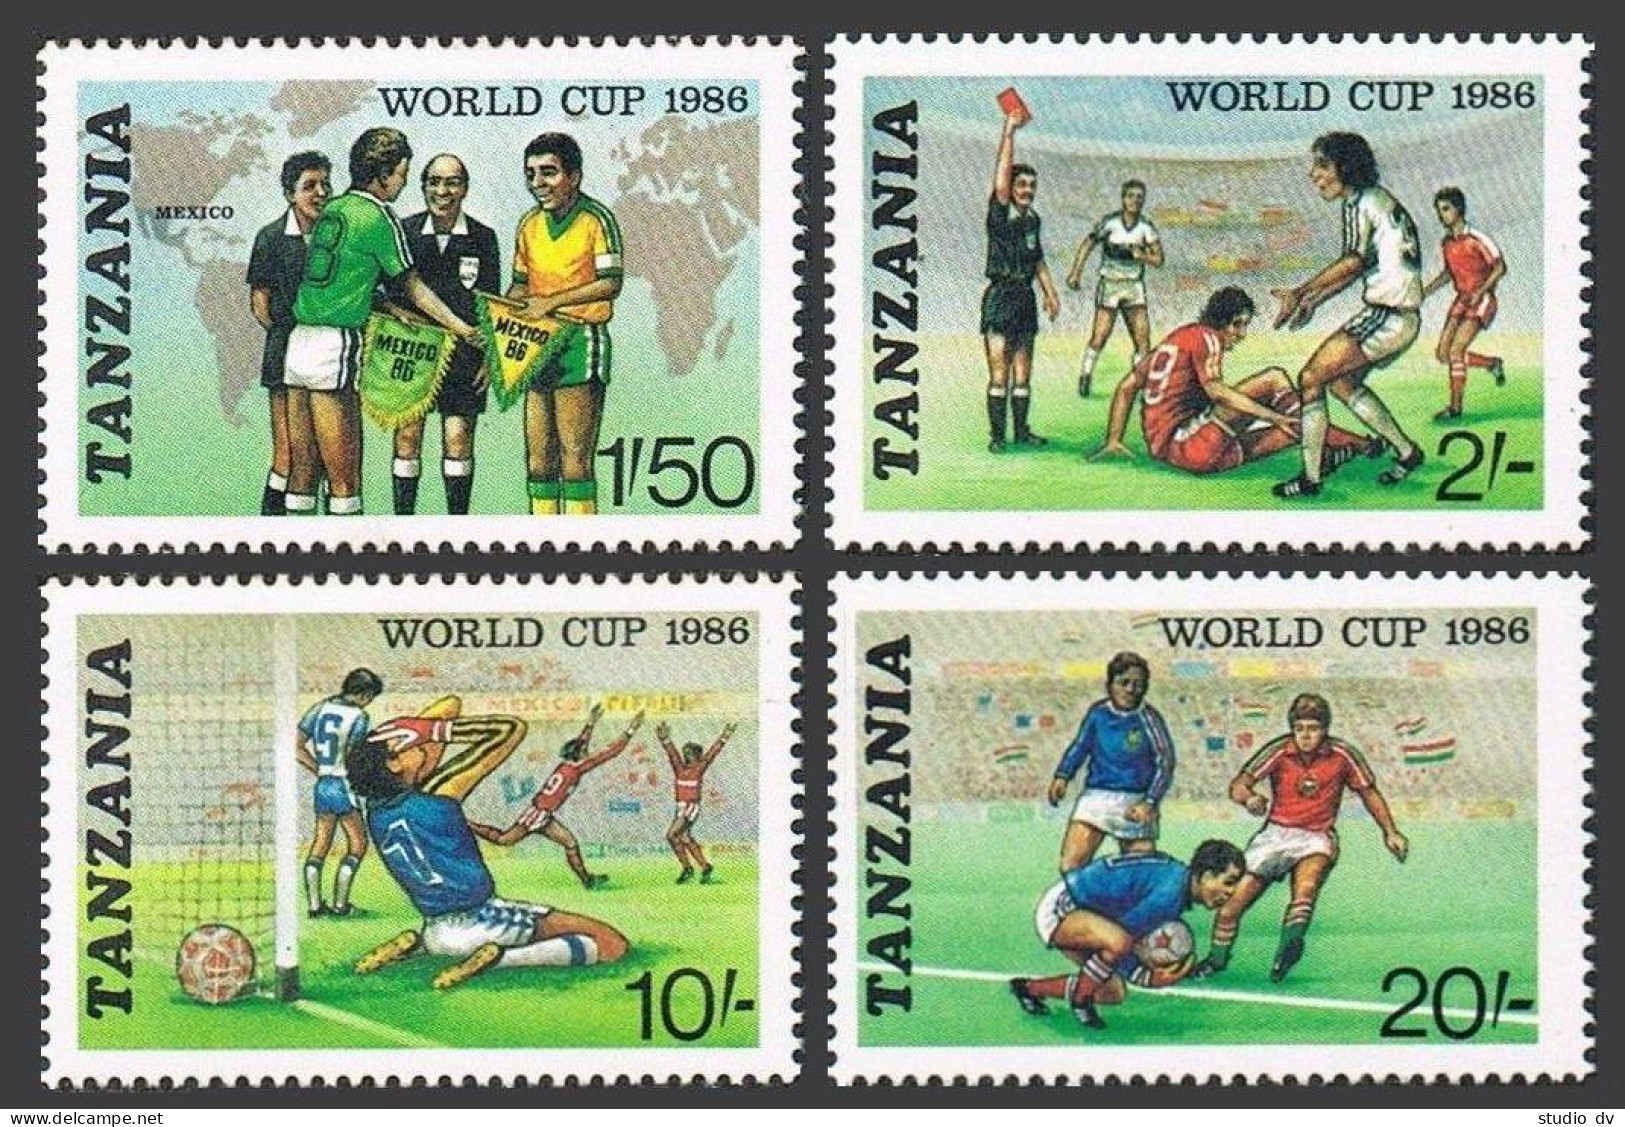 Tanzania 341-344,MNH.Michel 342-345. World Soccer Cup Mexico-1986. - Tanzania (1964-...)